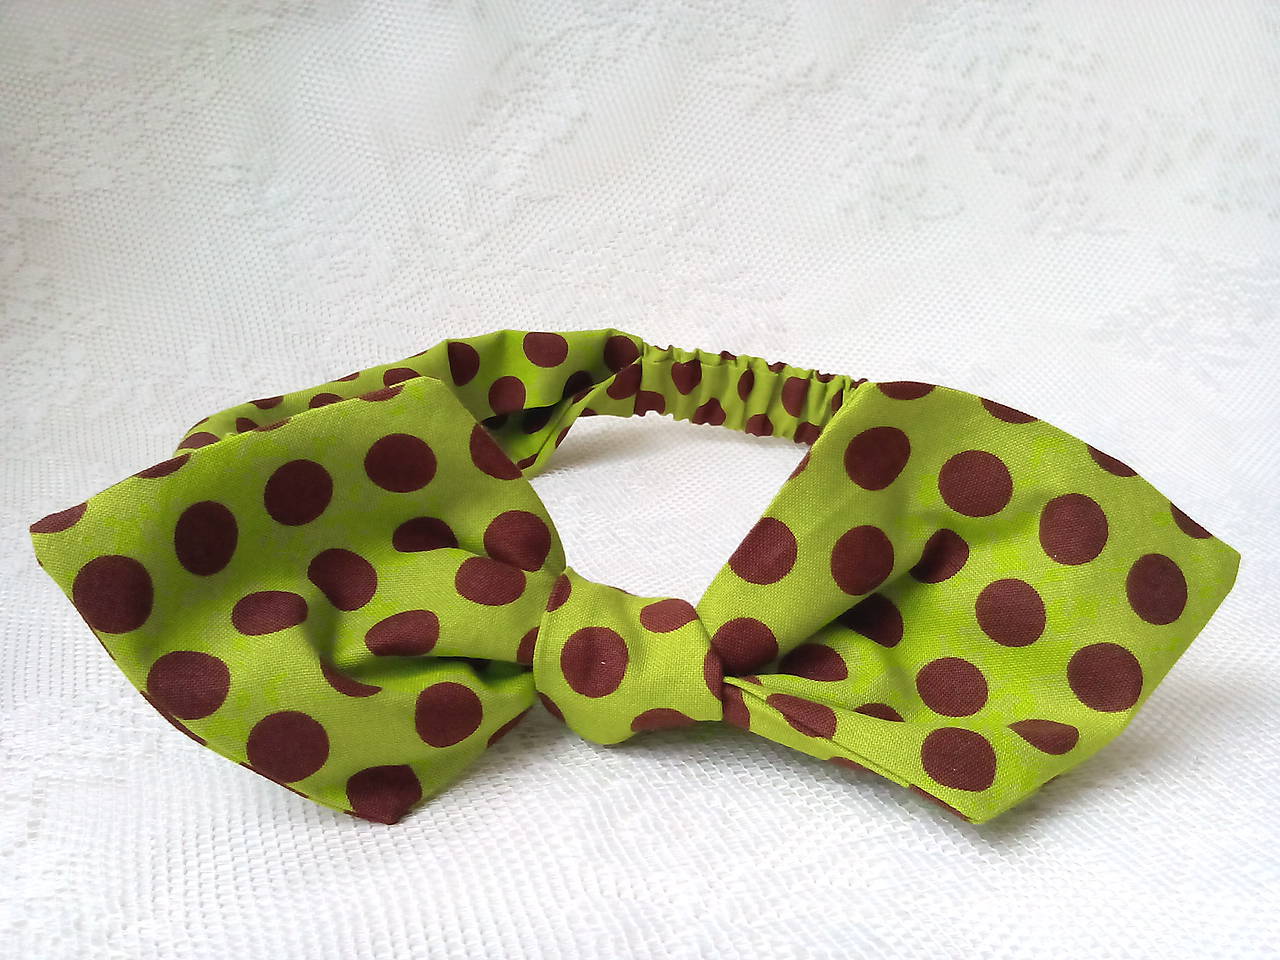 Pin Up headband on elastic (green/brown polka dots)